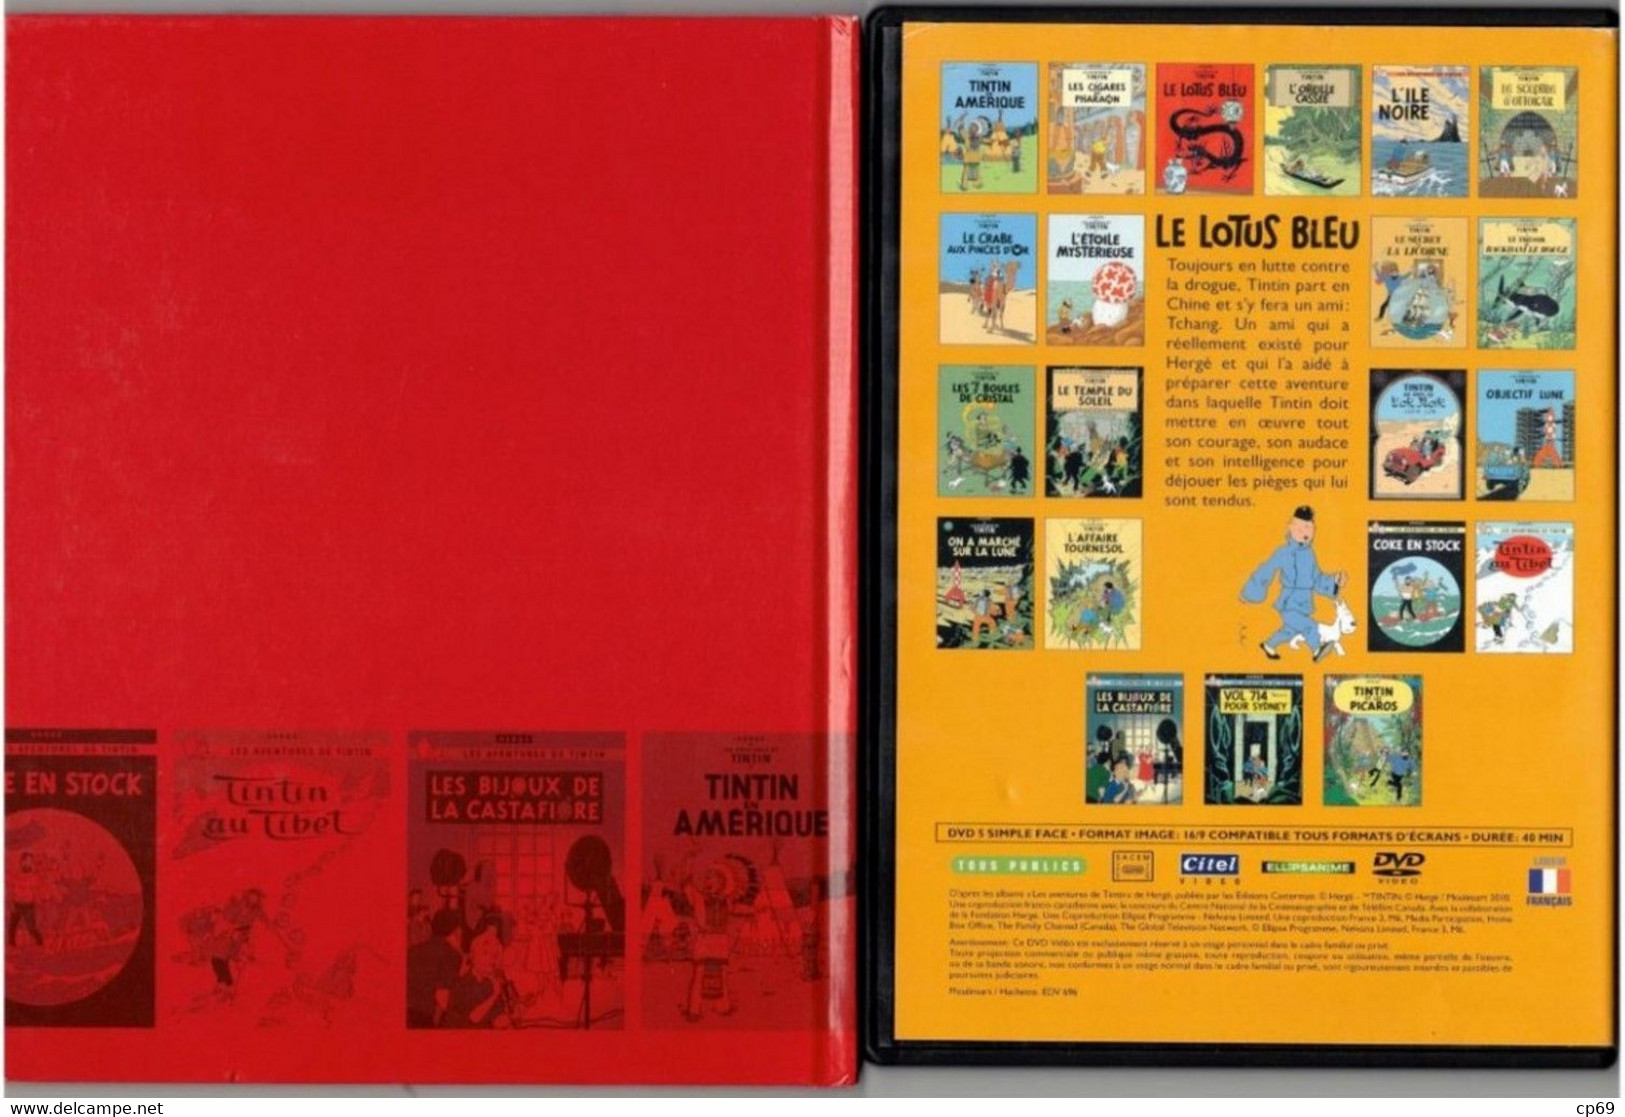 Tintin Hergé / Moulinsart 2010 Milou Chien Dog Cane Le Lotus Bleu N°1 DVD + Livret Explicatif En B.Etat - Animation